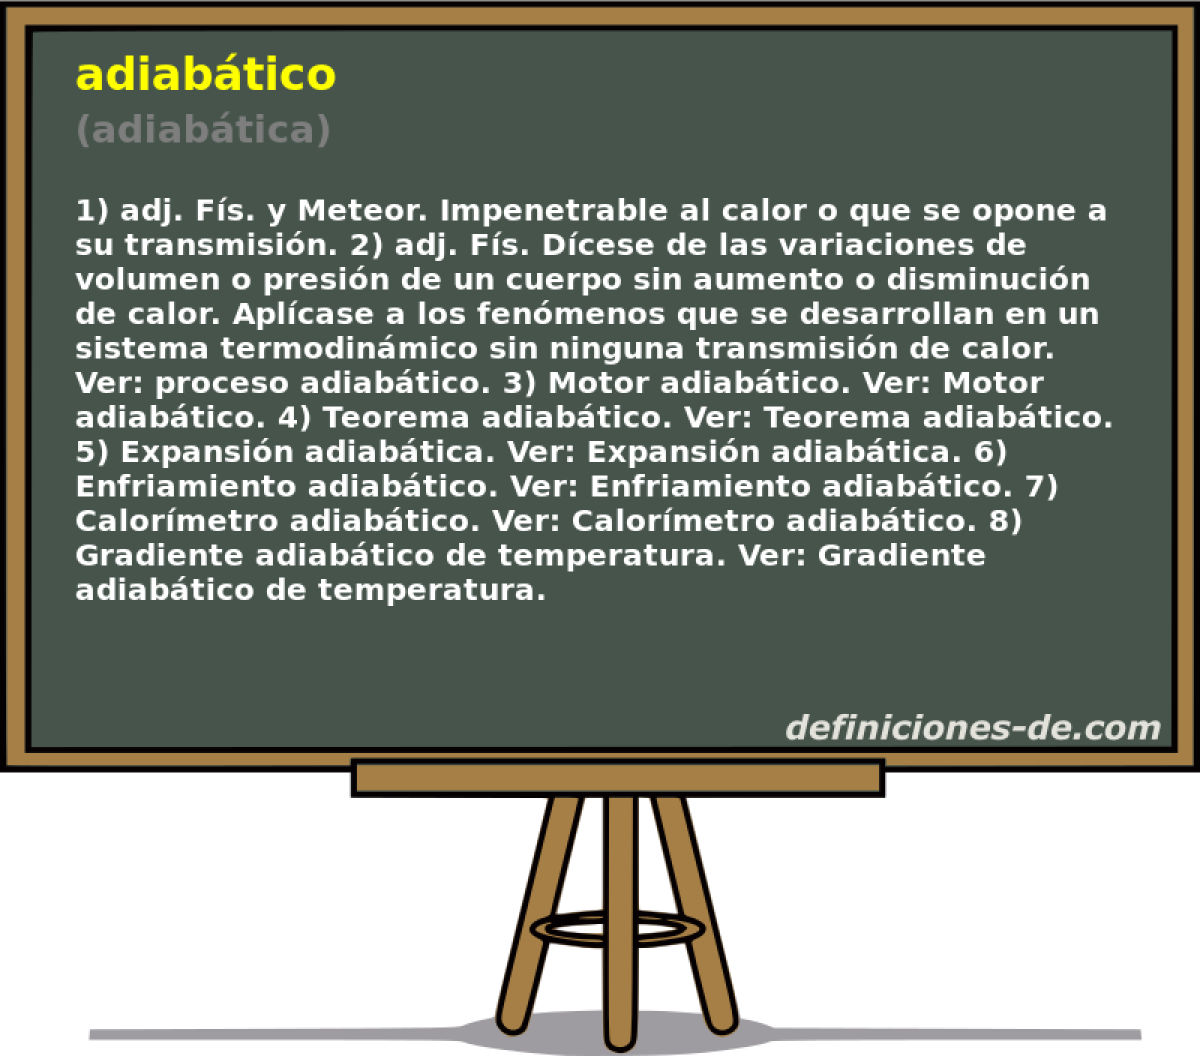 adiabtico (adiabtica)